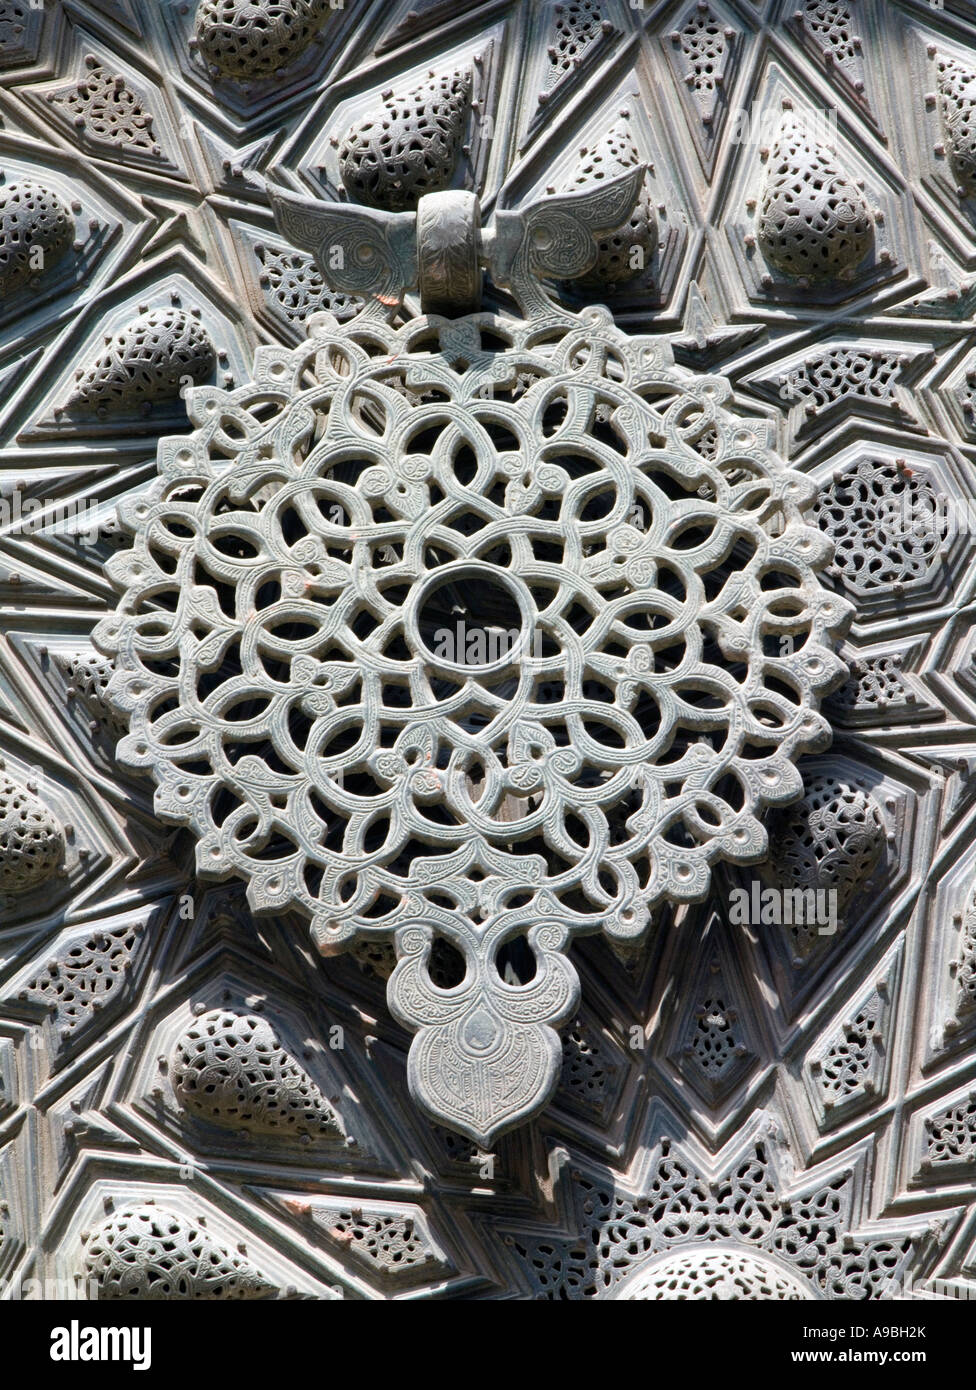 Sultan Hasan complex, Cairo, detail of knocker of door from original entrance Stock Photo